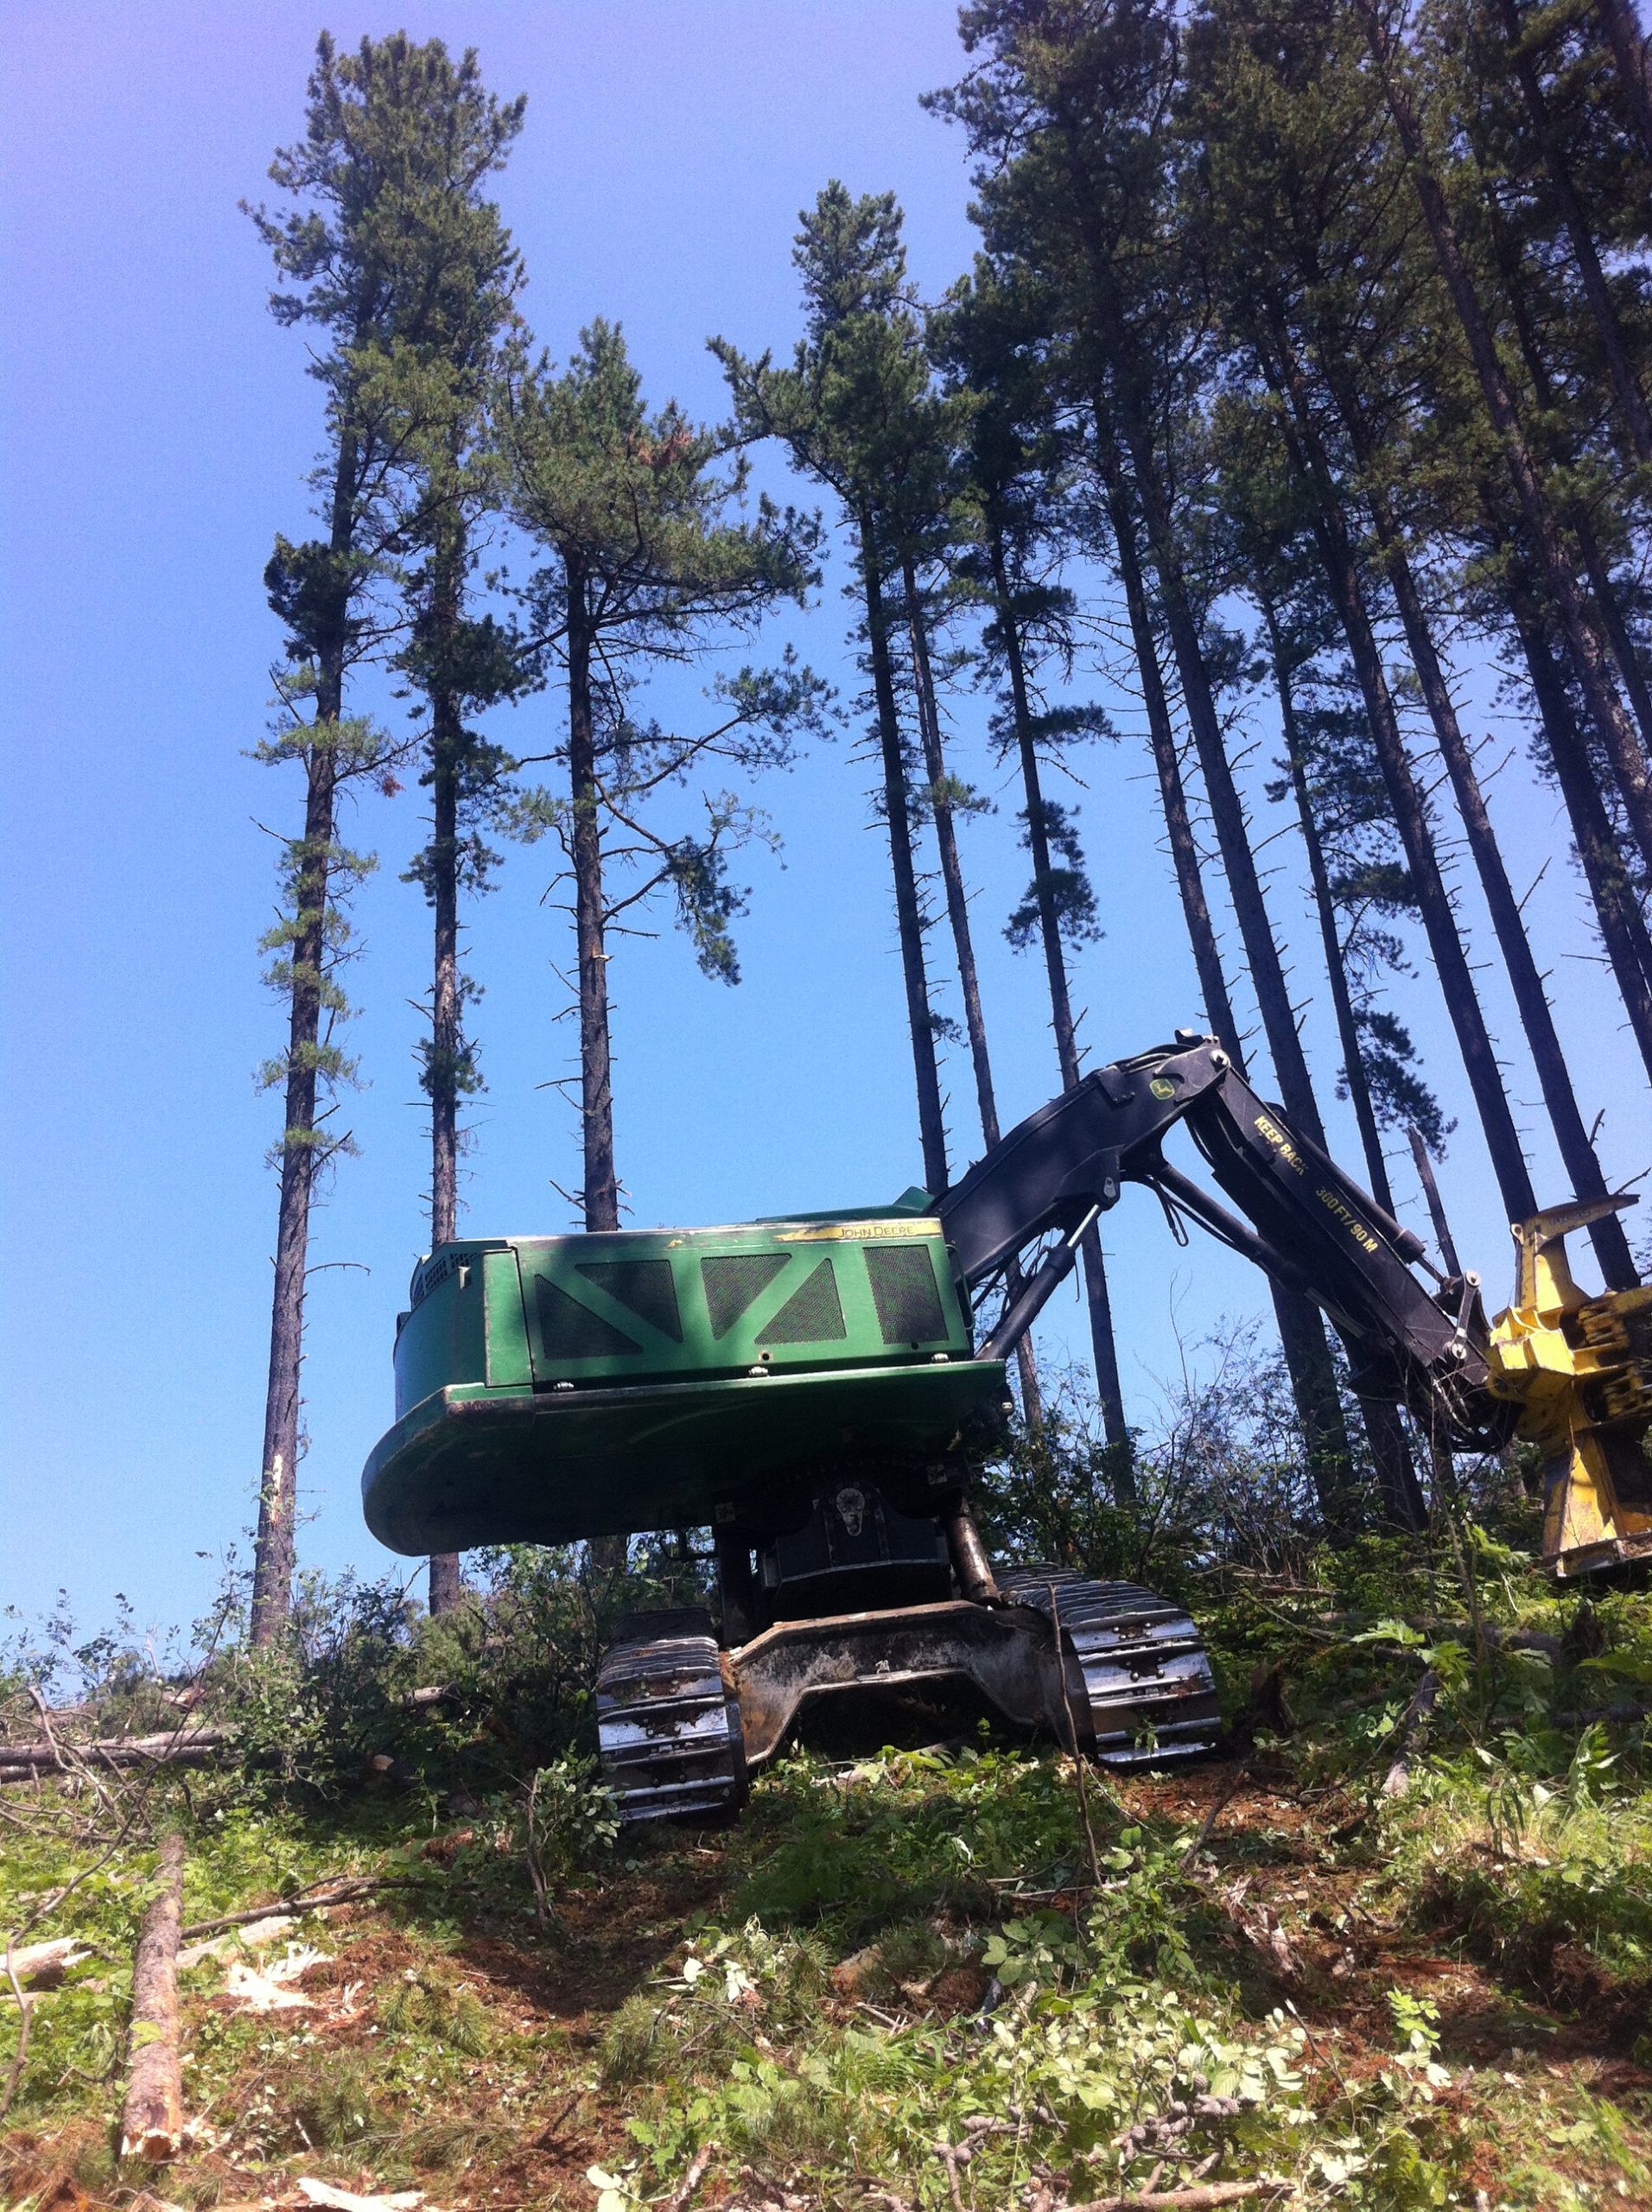 A large machine harvesting pine trees